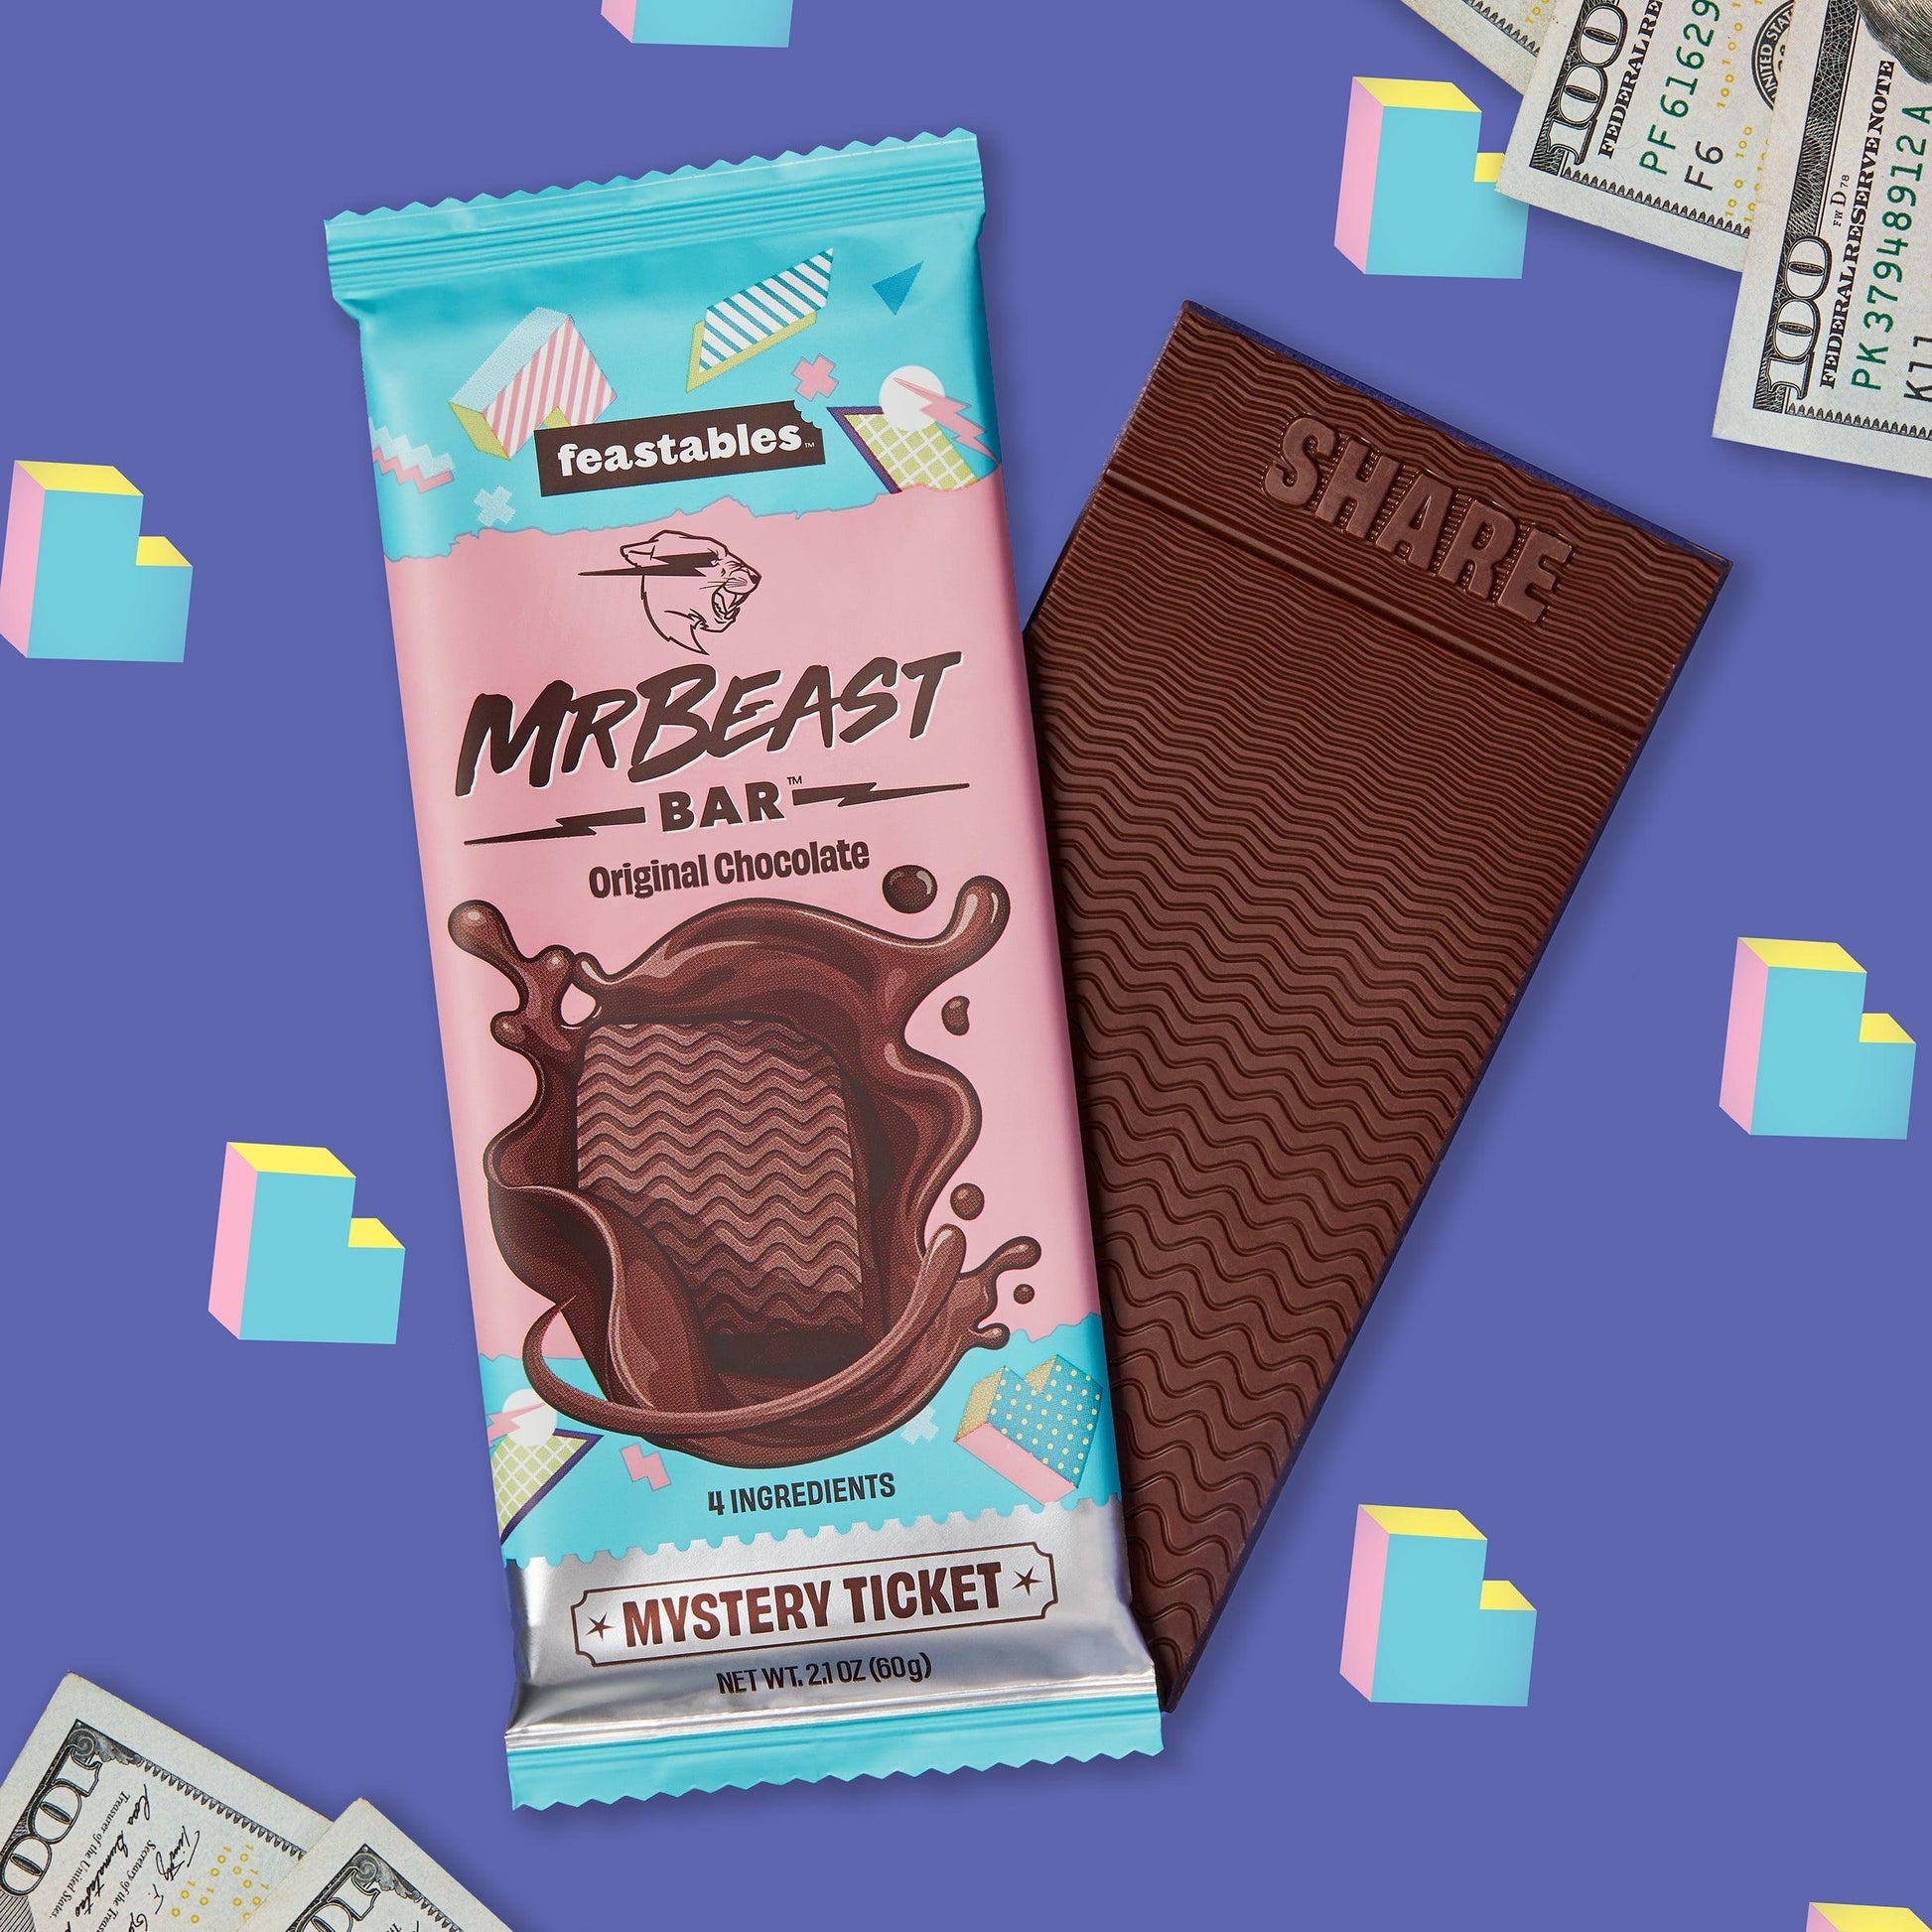 How much sugar is in MrBeast chocolate bars?